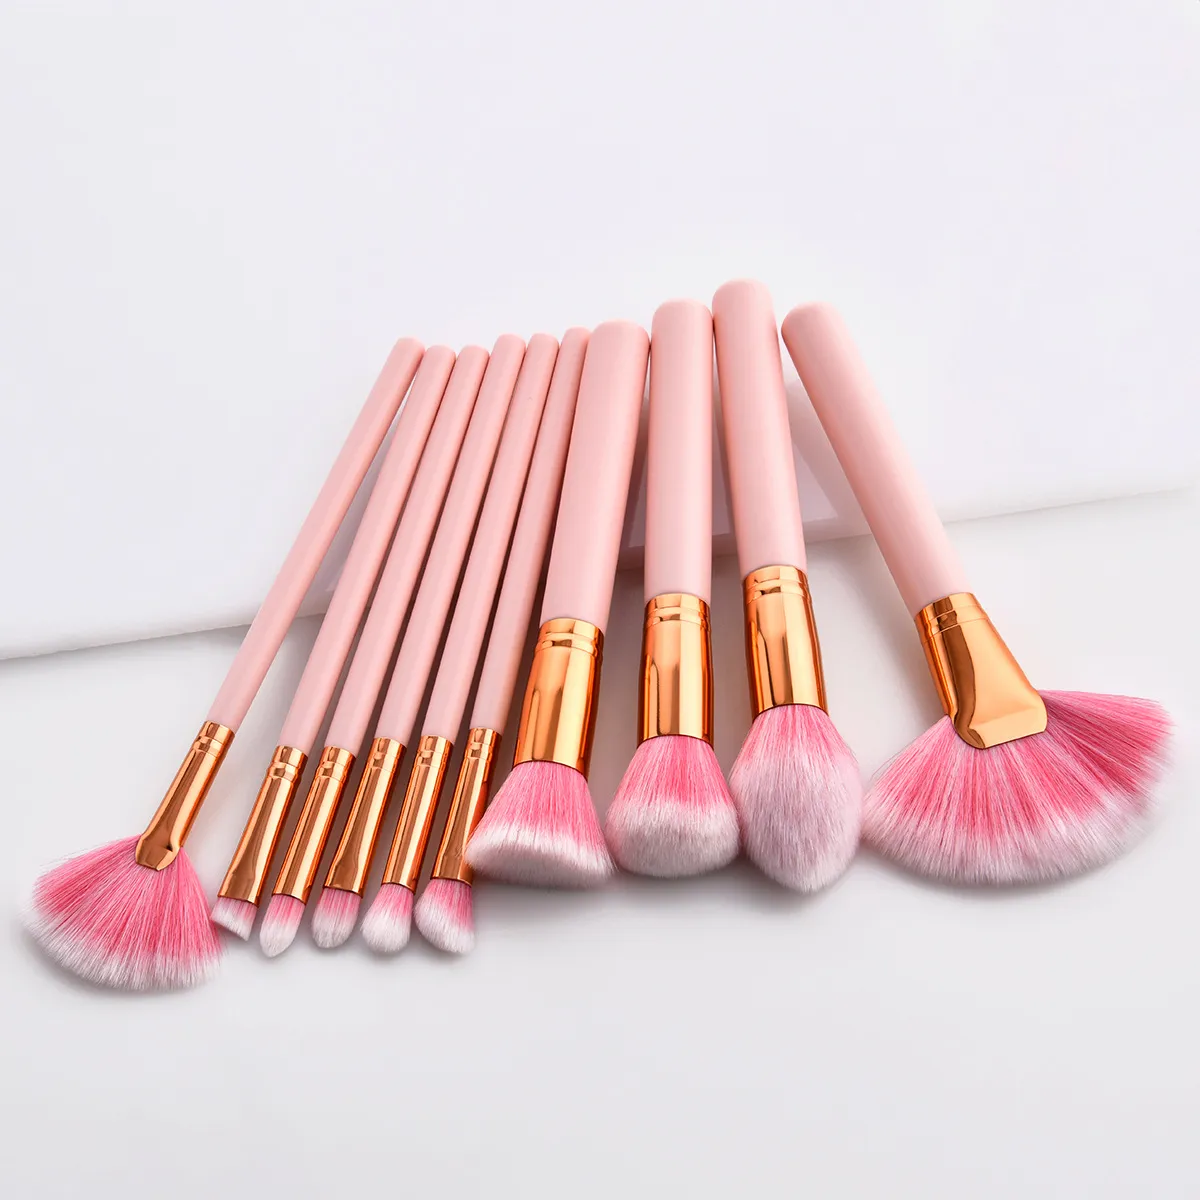 Brandneues 10-teiliges Make-up-Pinsel-Set in rosa Farbe mit Holzgriff, hochwertiges Kunsthaar, DHL-freie Kosmetikpinsel